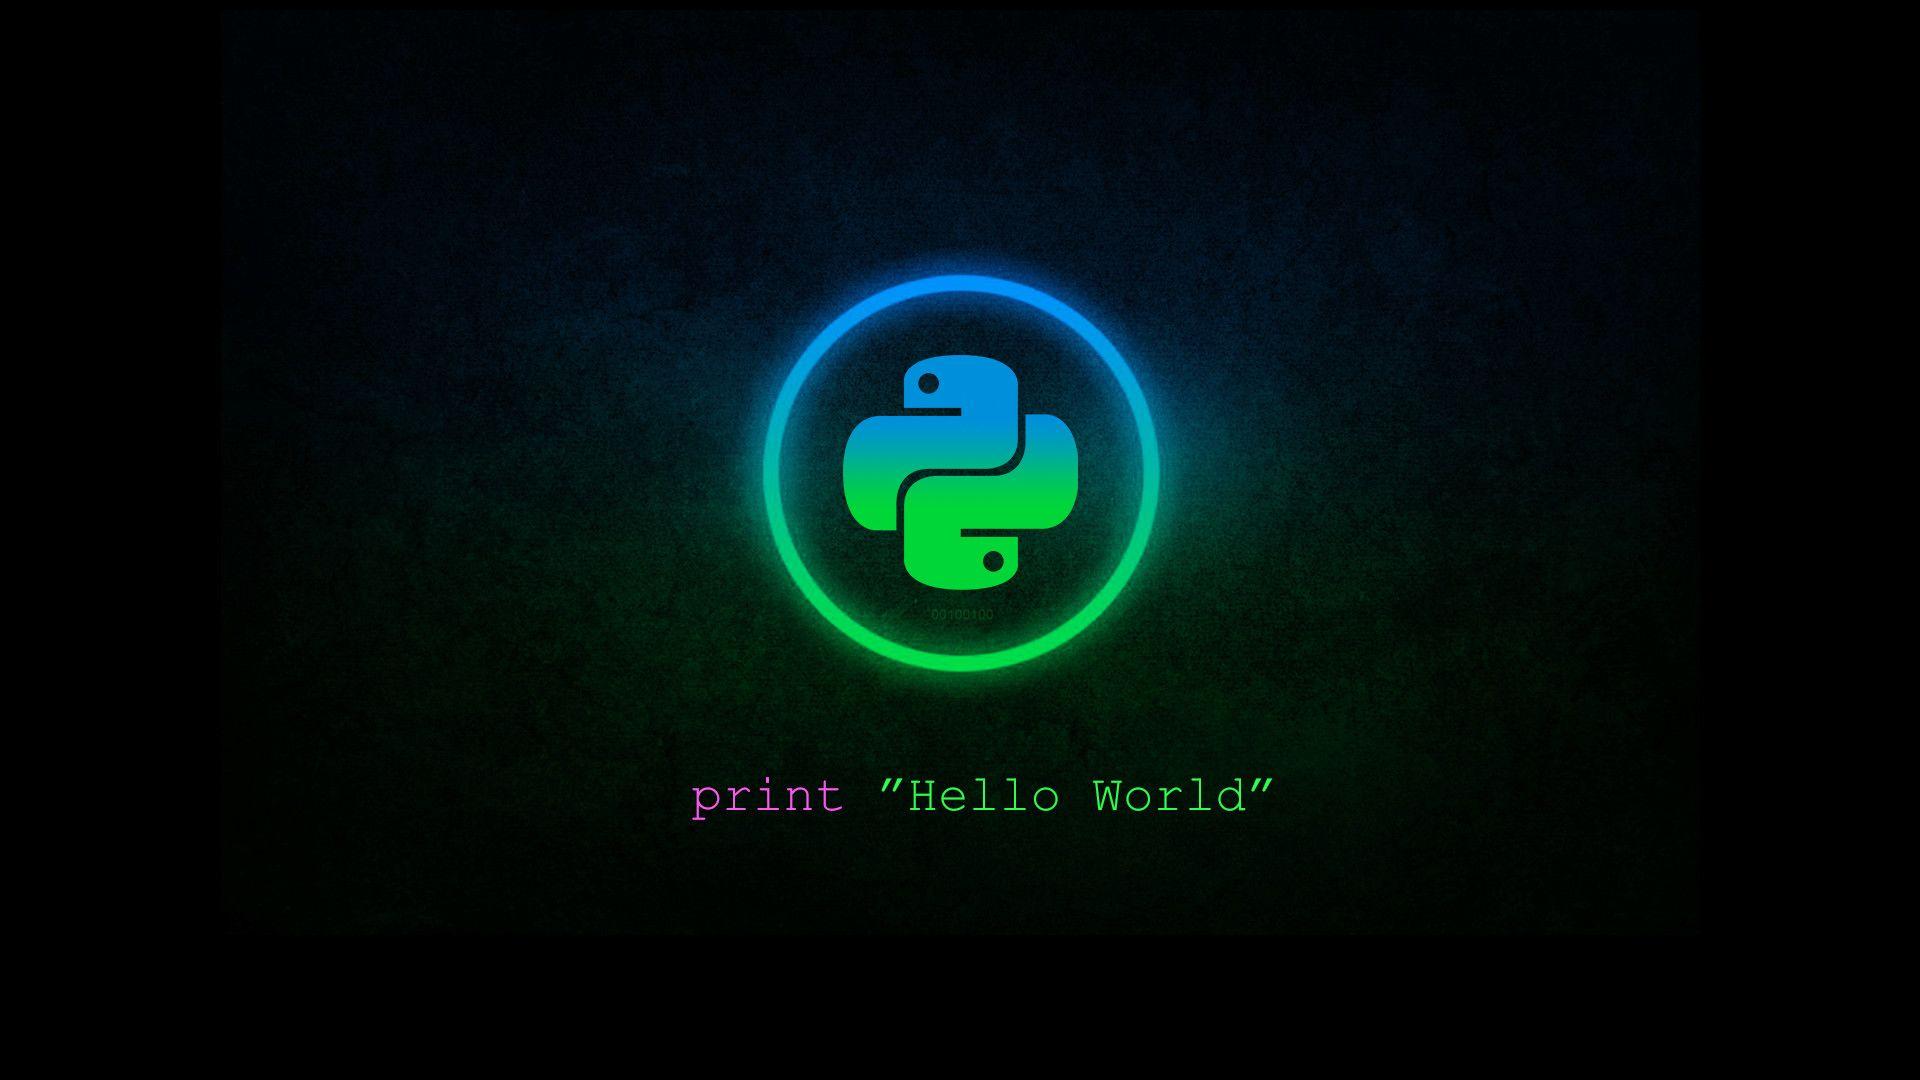 Python Programming Language Wallpaper. Python programming, Code wallpaper, Computer science